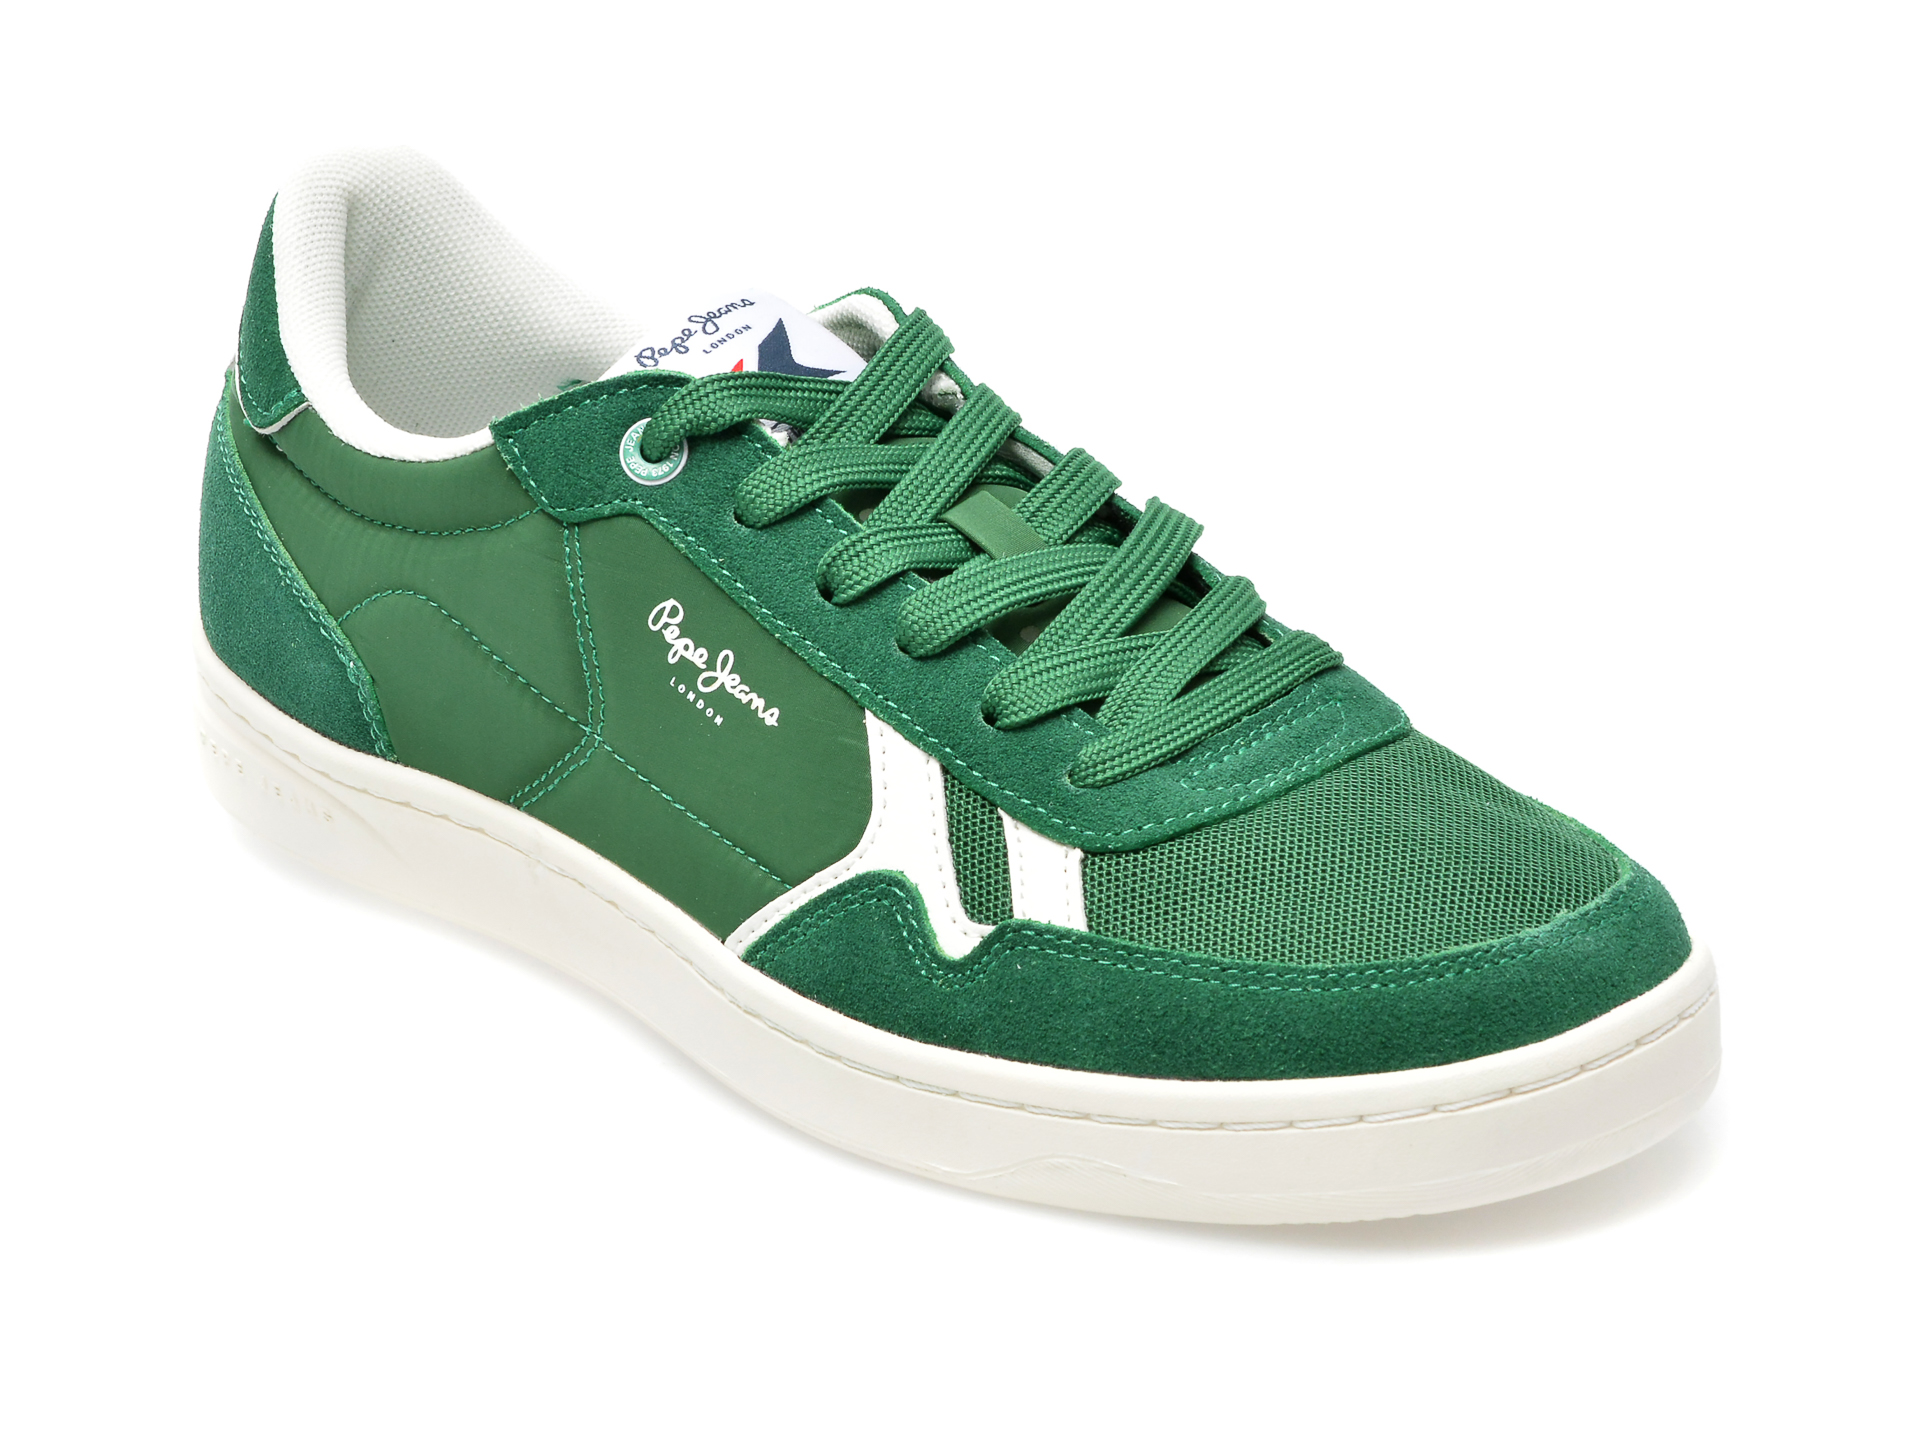 Pantofi sport PEPE JEANS verzi, MS30900, din material textil si piele intoarsa /barbati/pantofi